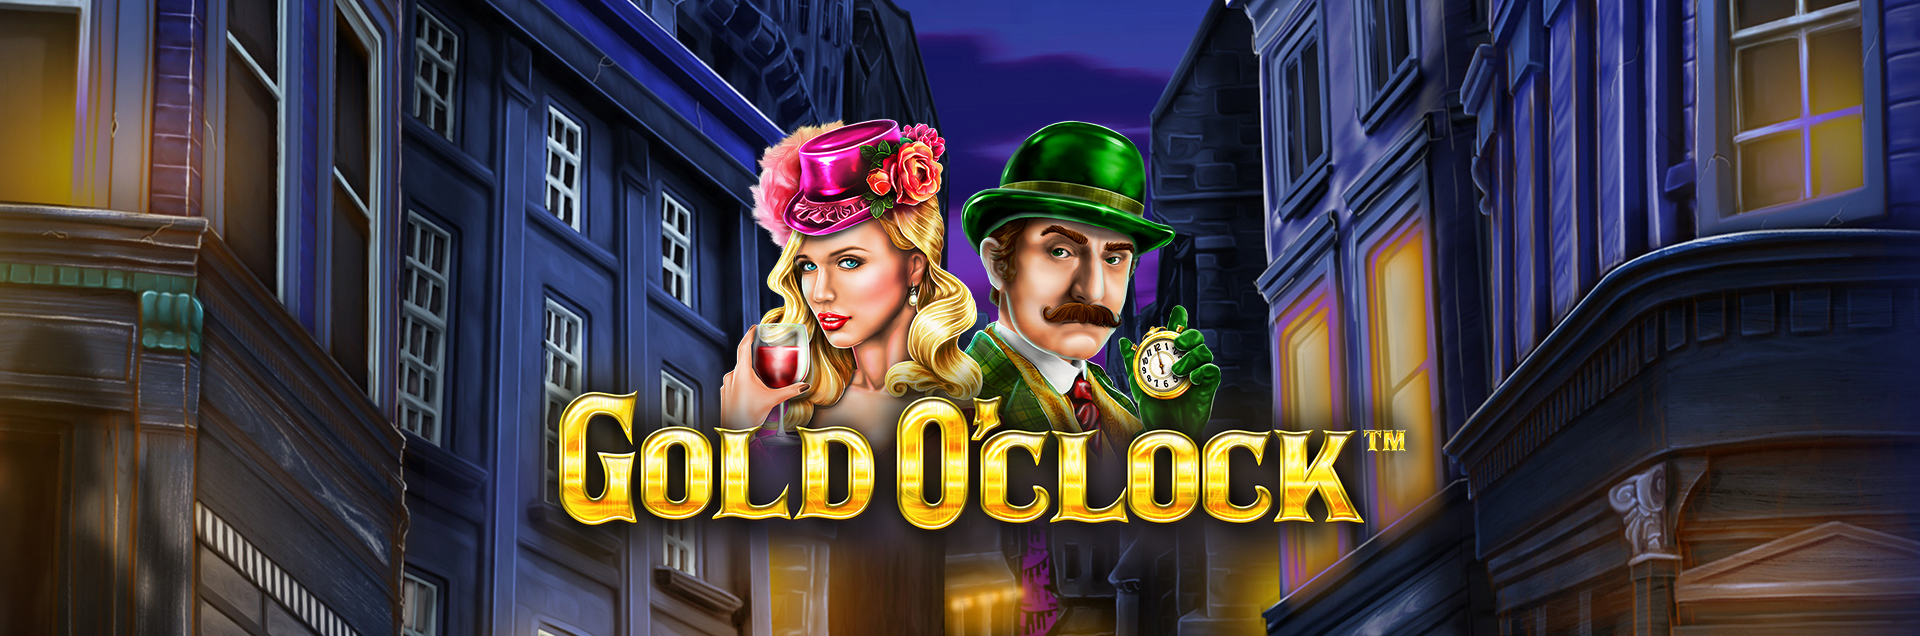 Gold O Clock games header final